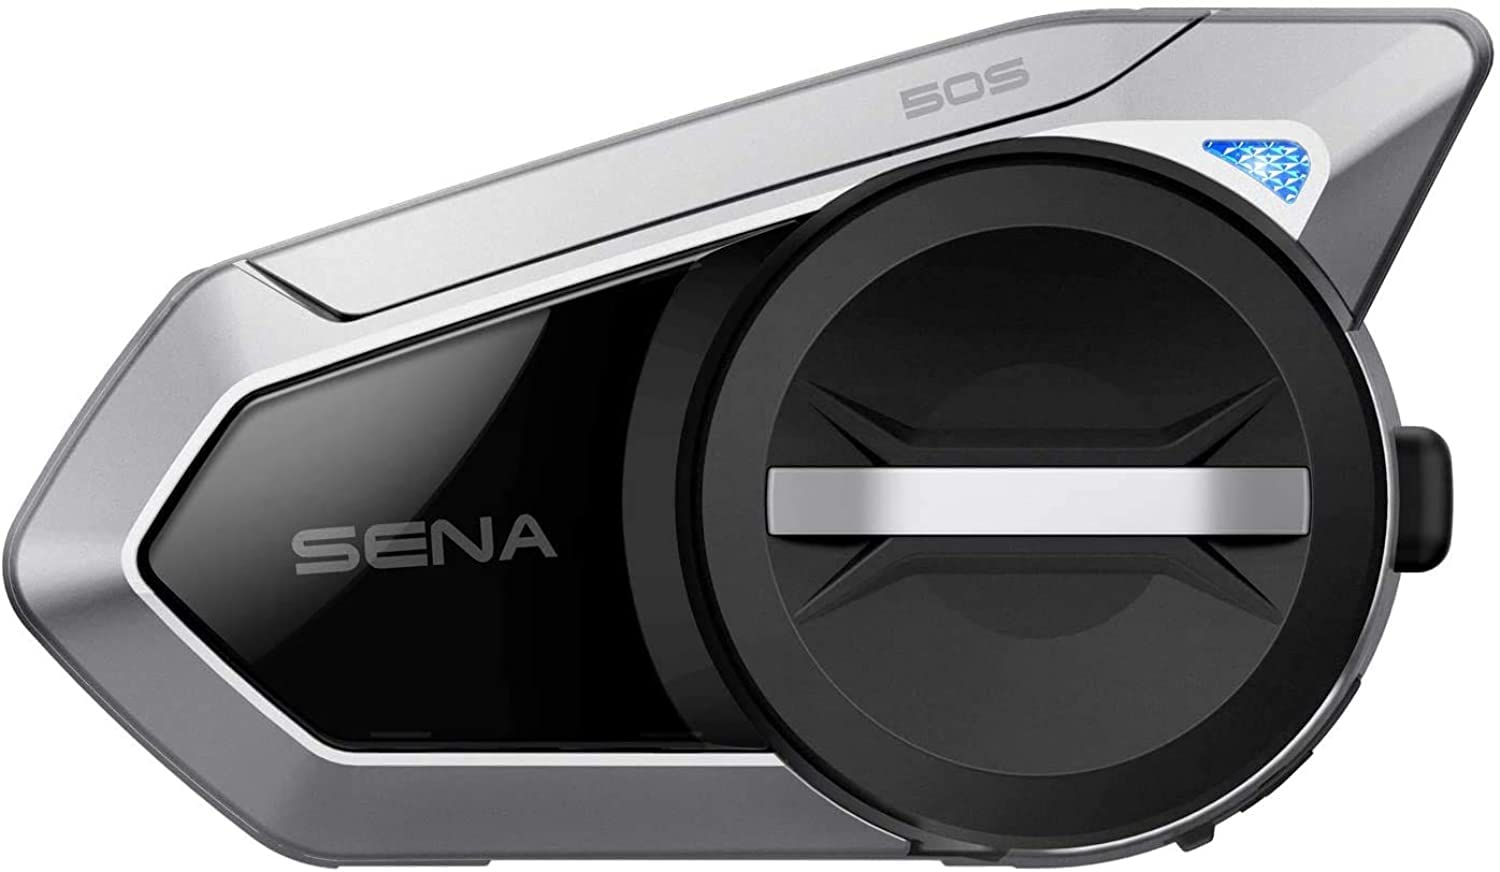 Sena 50S Motorrad Bluetooth Kommunikationssystem mit Mesh 2.0 Intercom, Doppelpack von Sena